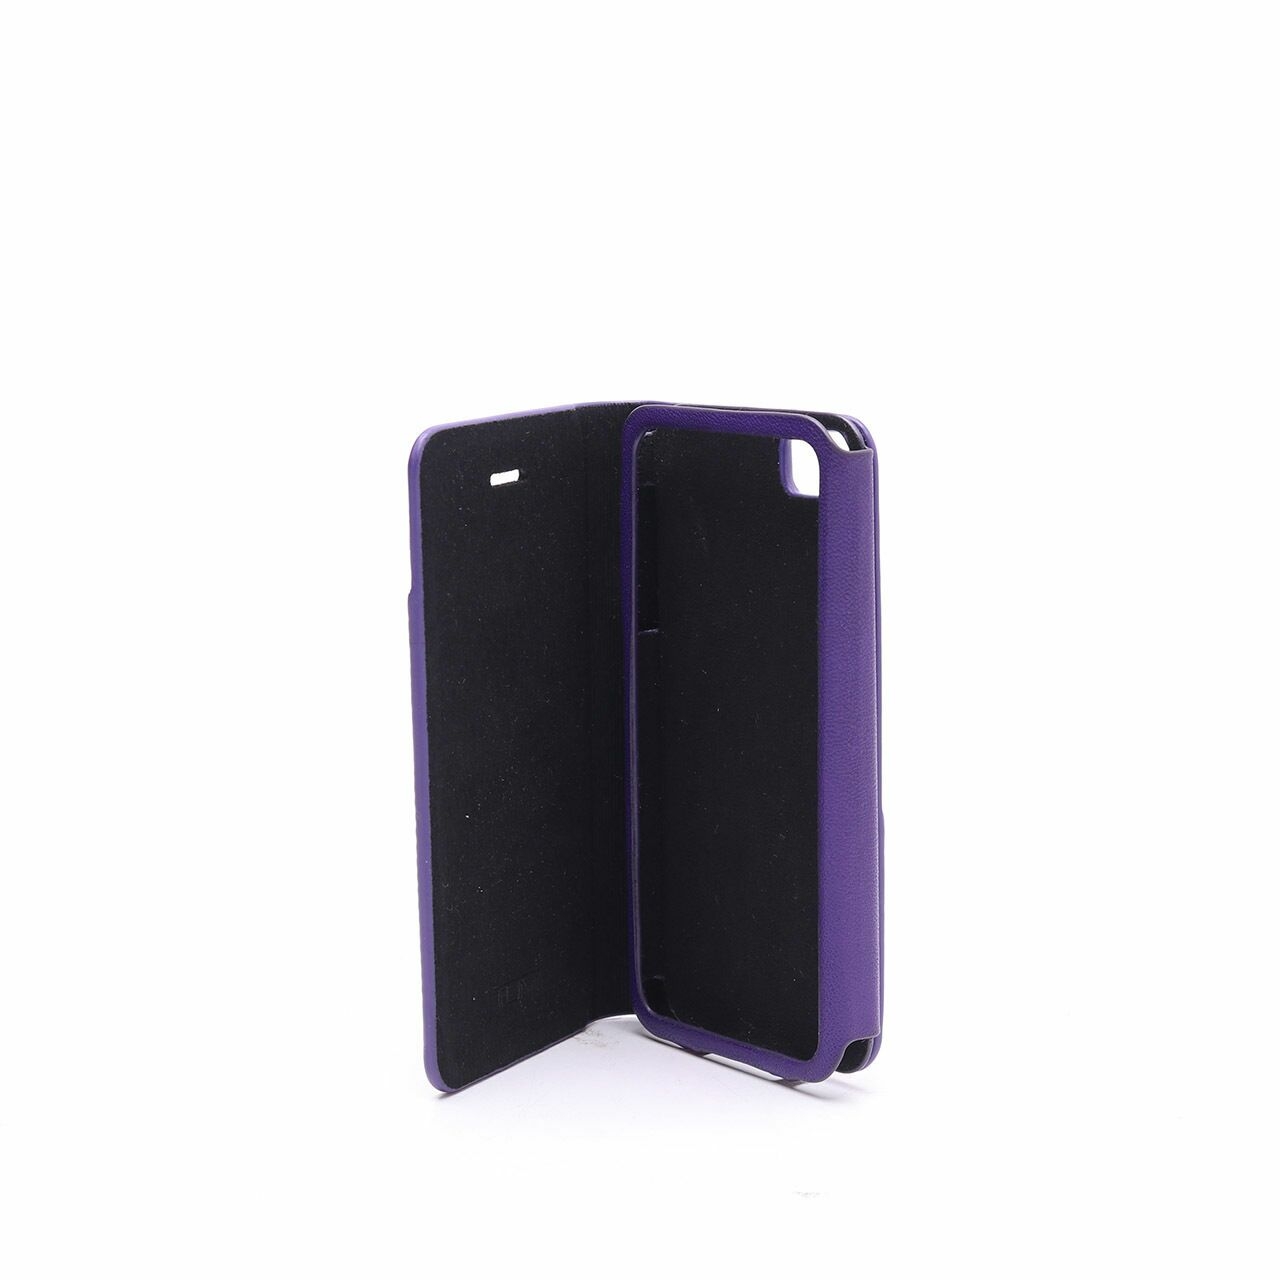 Tumi Purple & Fuchsia Cover For iPhone 5 & 5S Phone Case